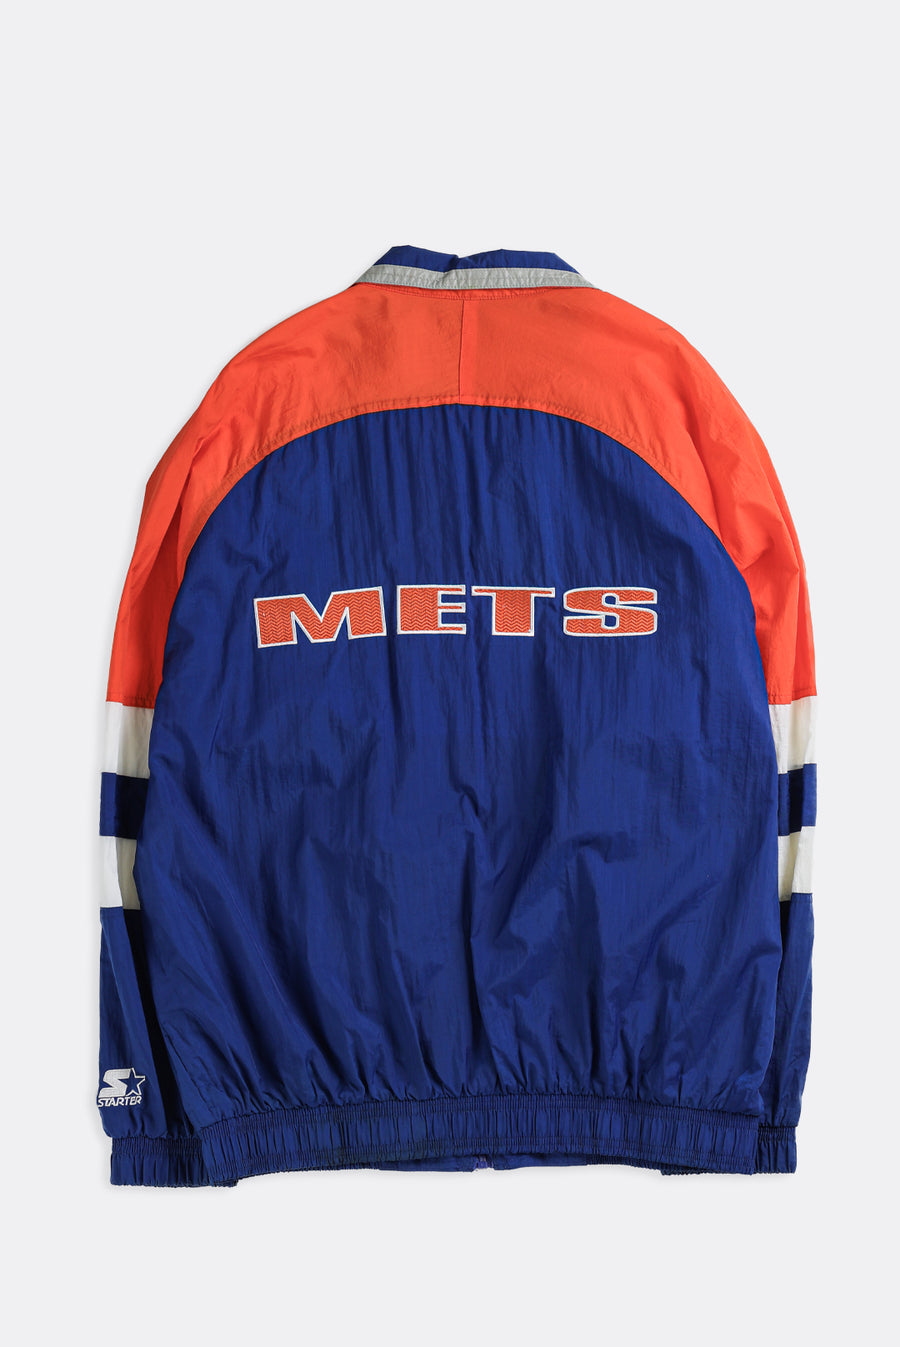 Vintage MLB Mets Windbreaker Jacket